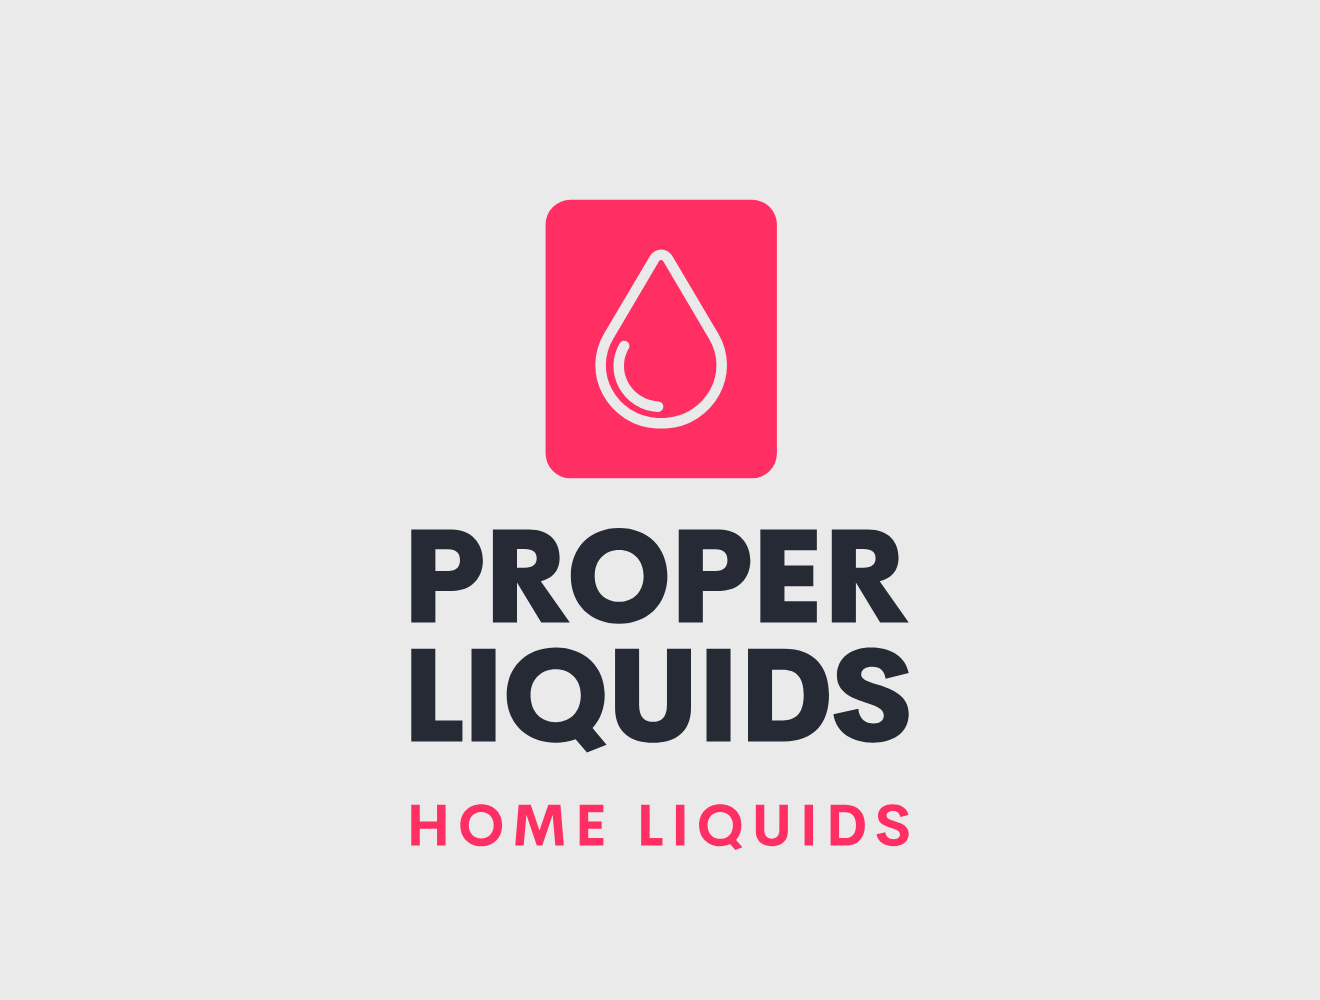 Proper Liquids Home Liquids for a cleaner house